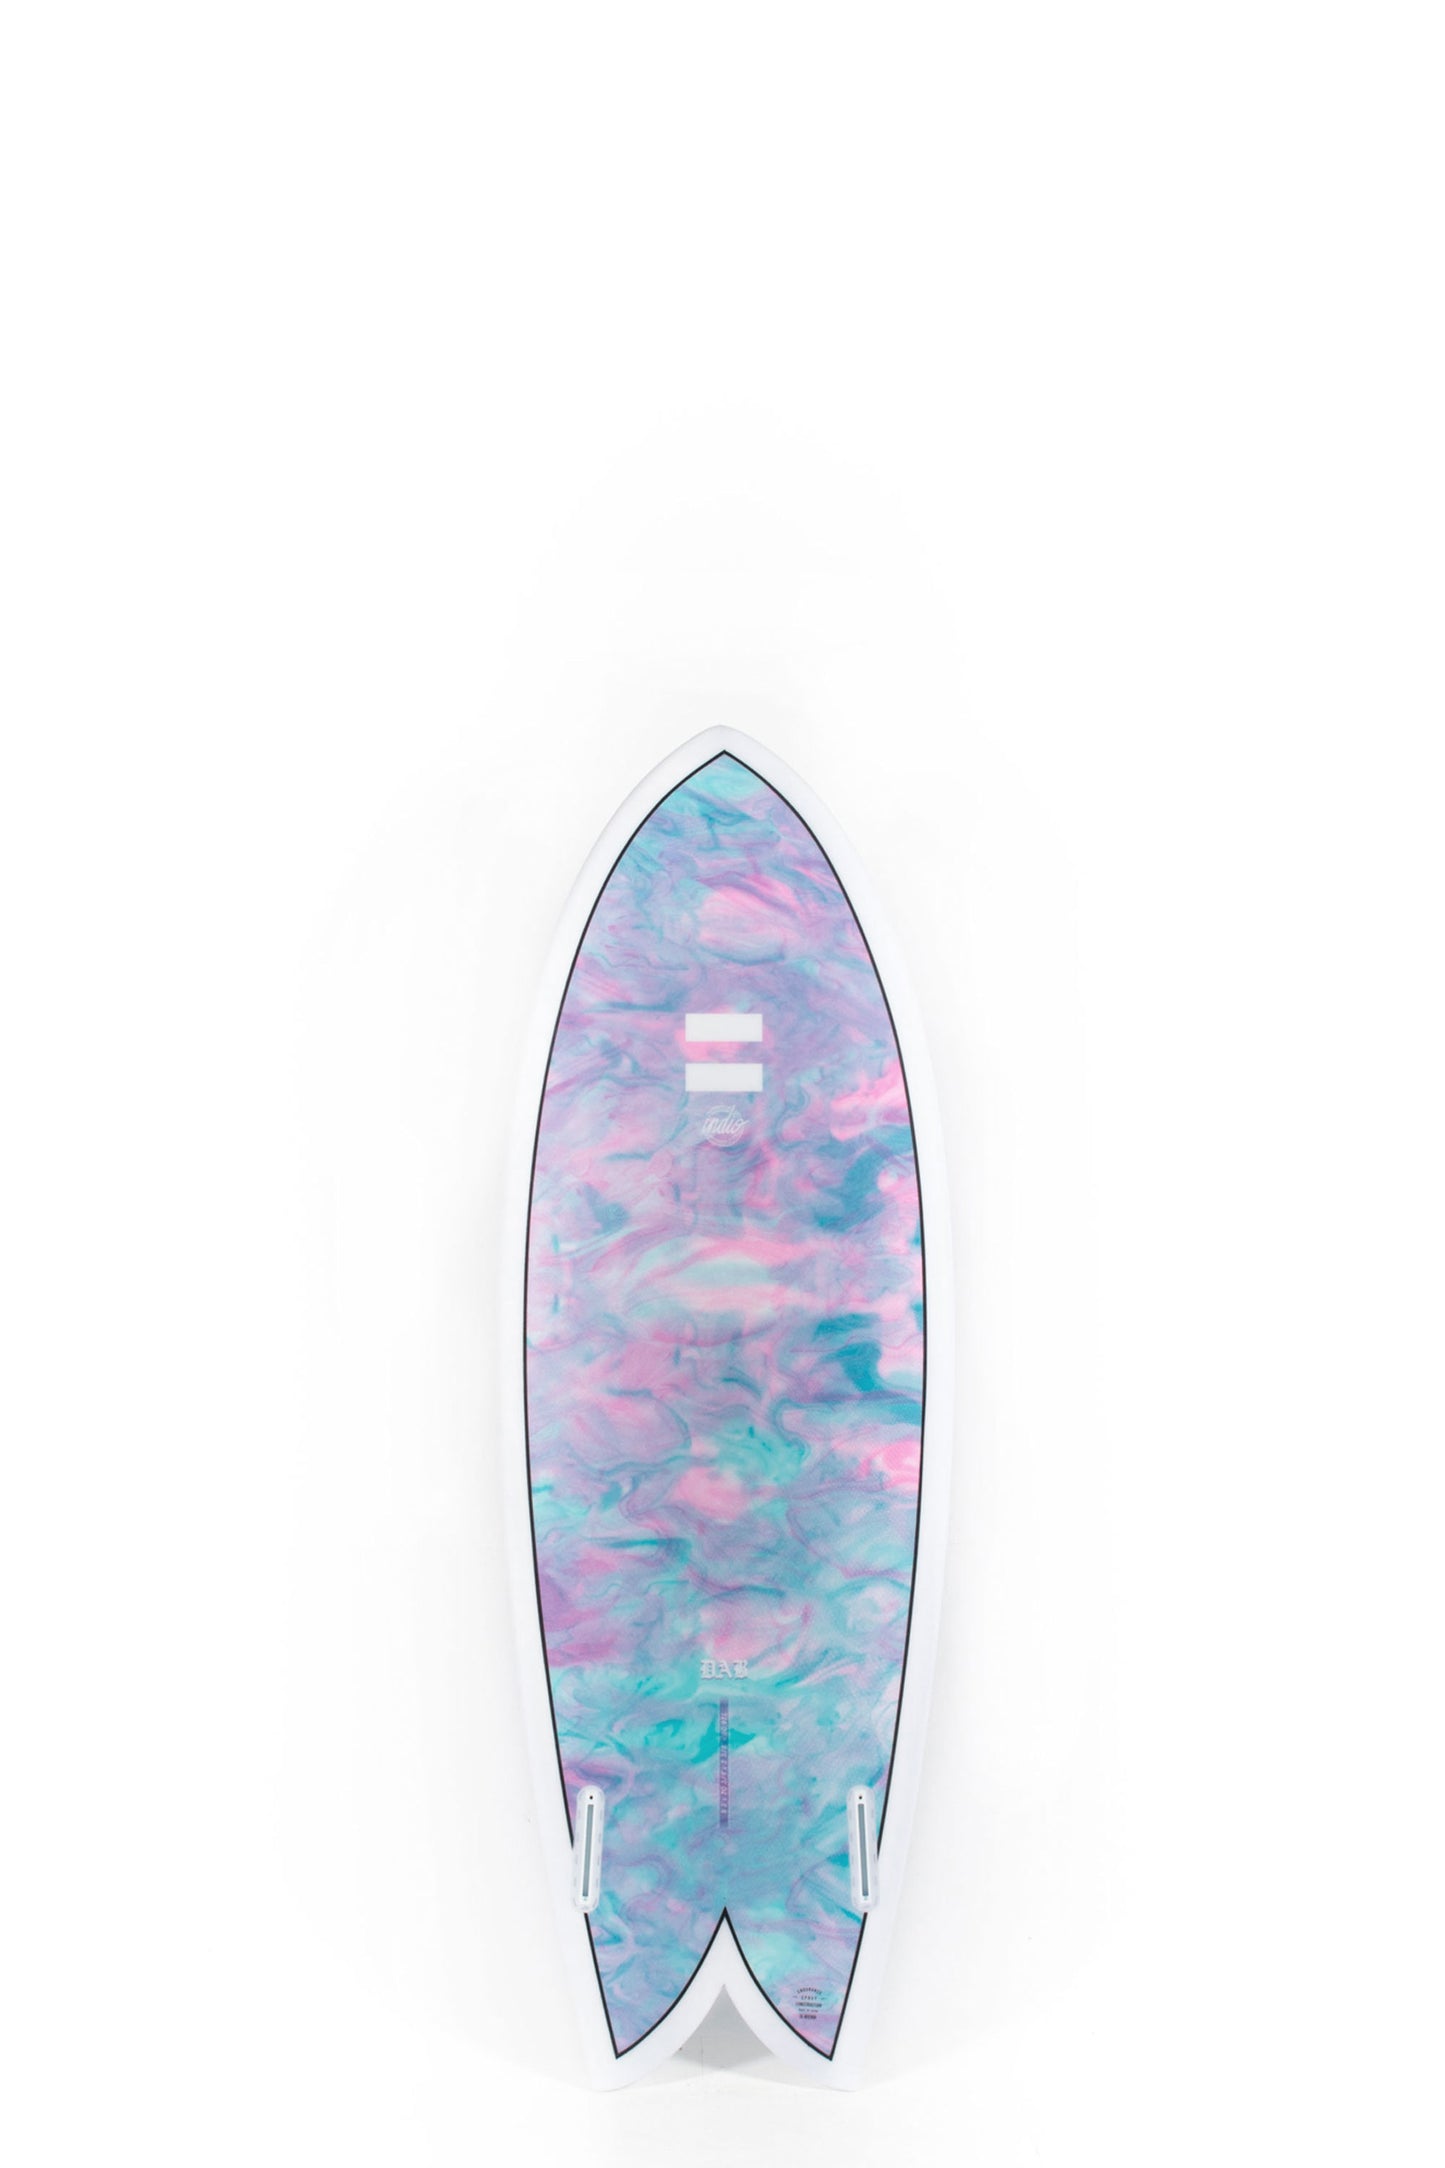 Pukas Surf Shop - Indio Surfboards - DAB Swirl Effect Blue Purple - 5’9” x 21 1/8 x 2 9/16 x 37.6L.